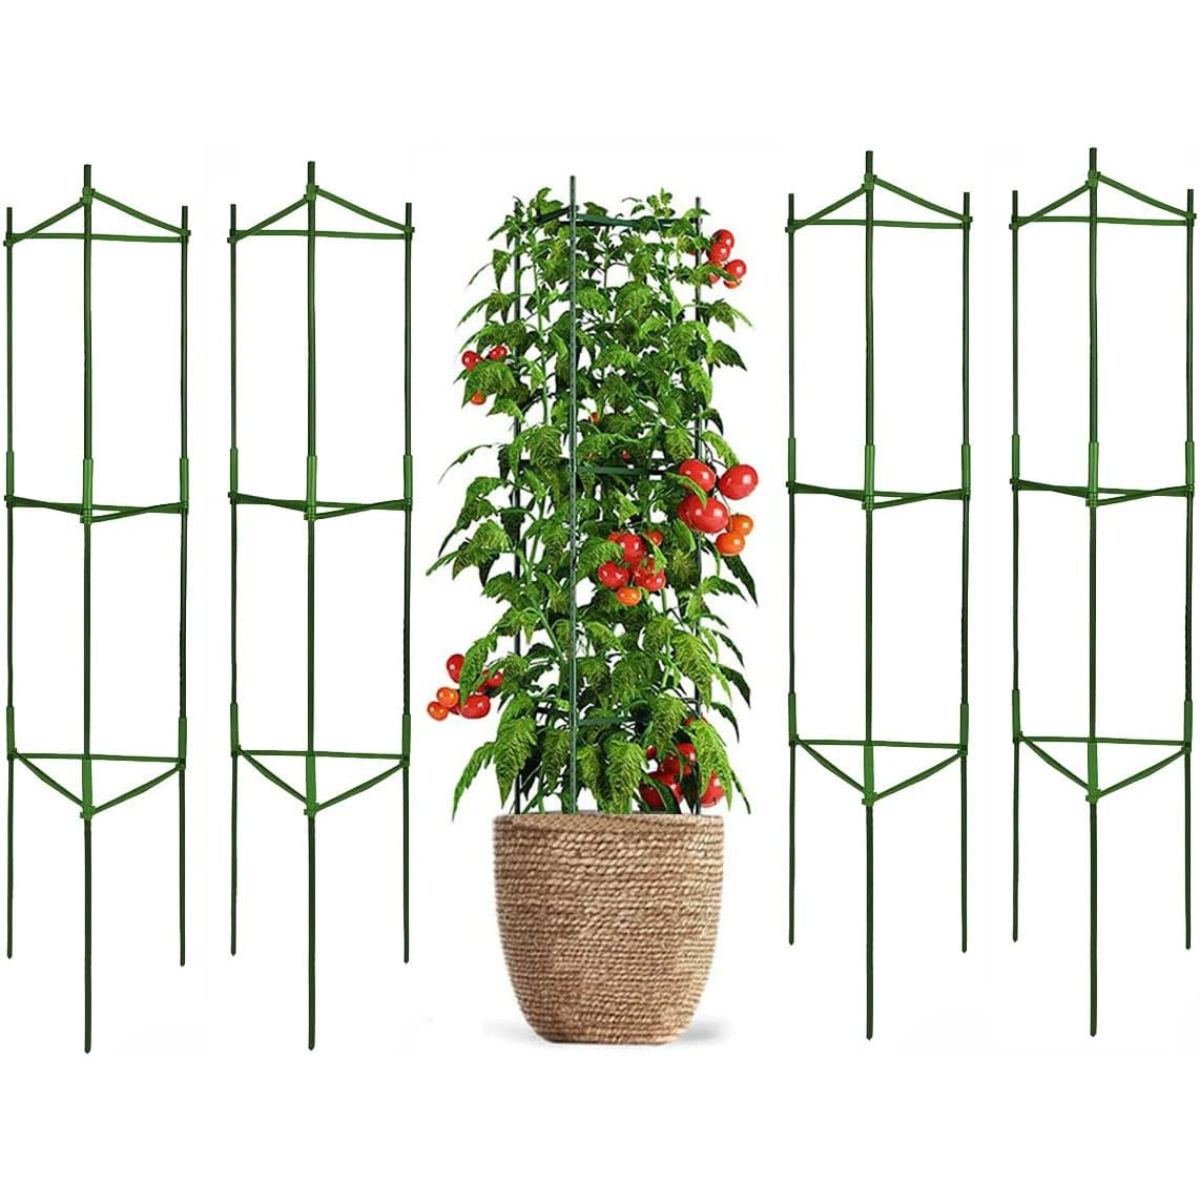 Derlights Tomato Cages